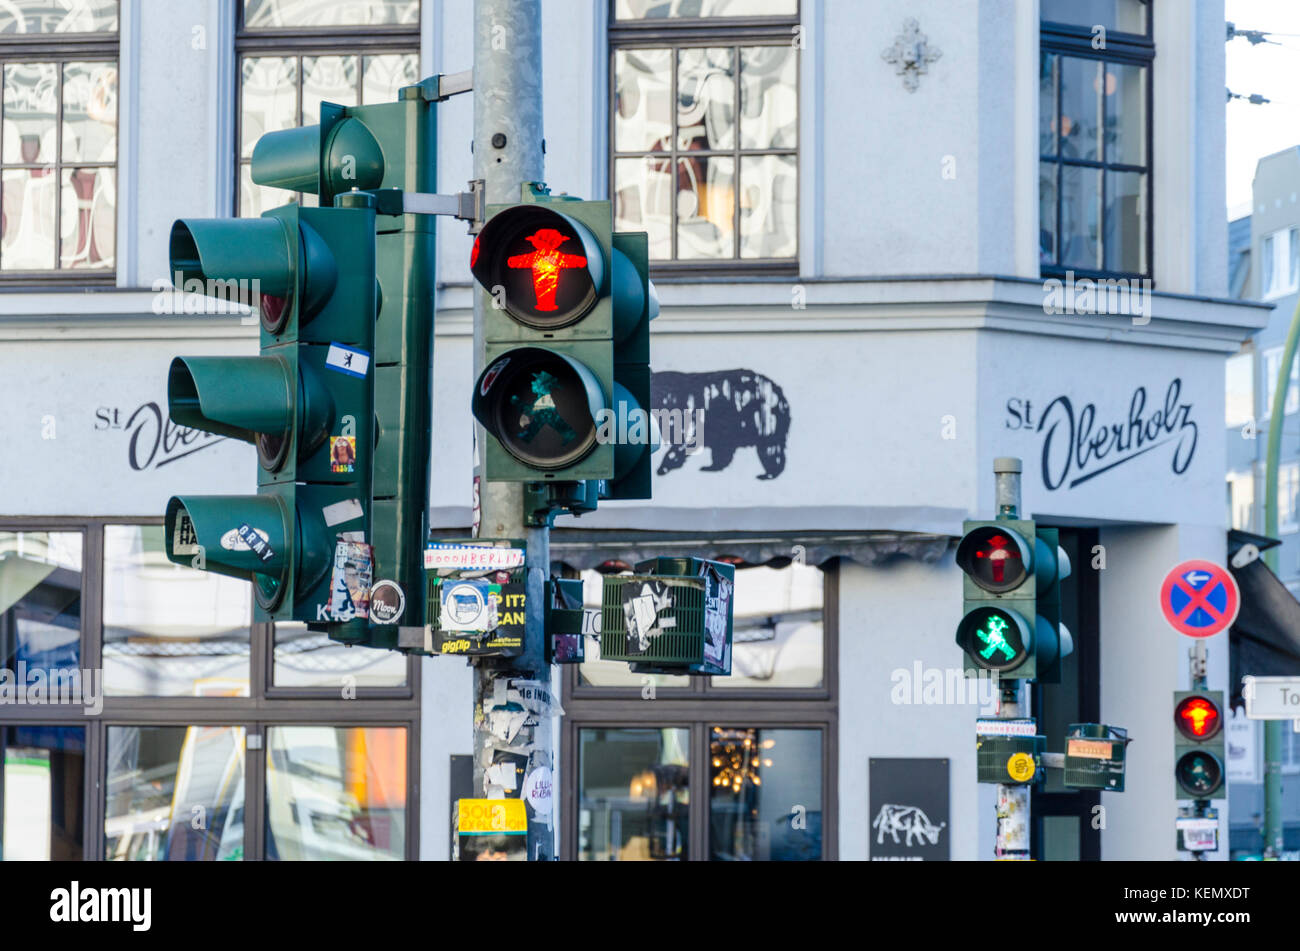 East German Ampelmännchen, little traffic light men, Ampelmann, pedestrian signals symbol, Berlin, Germany Stock Photo